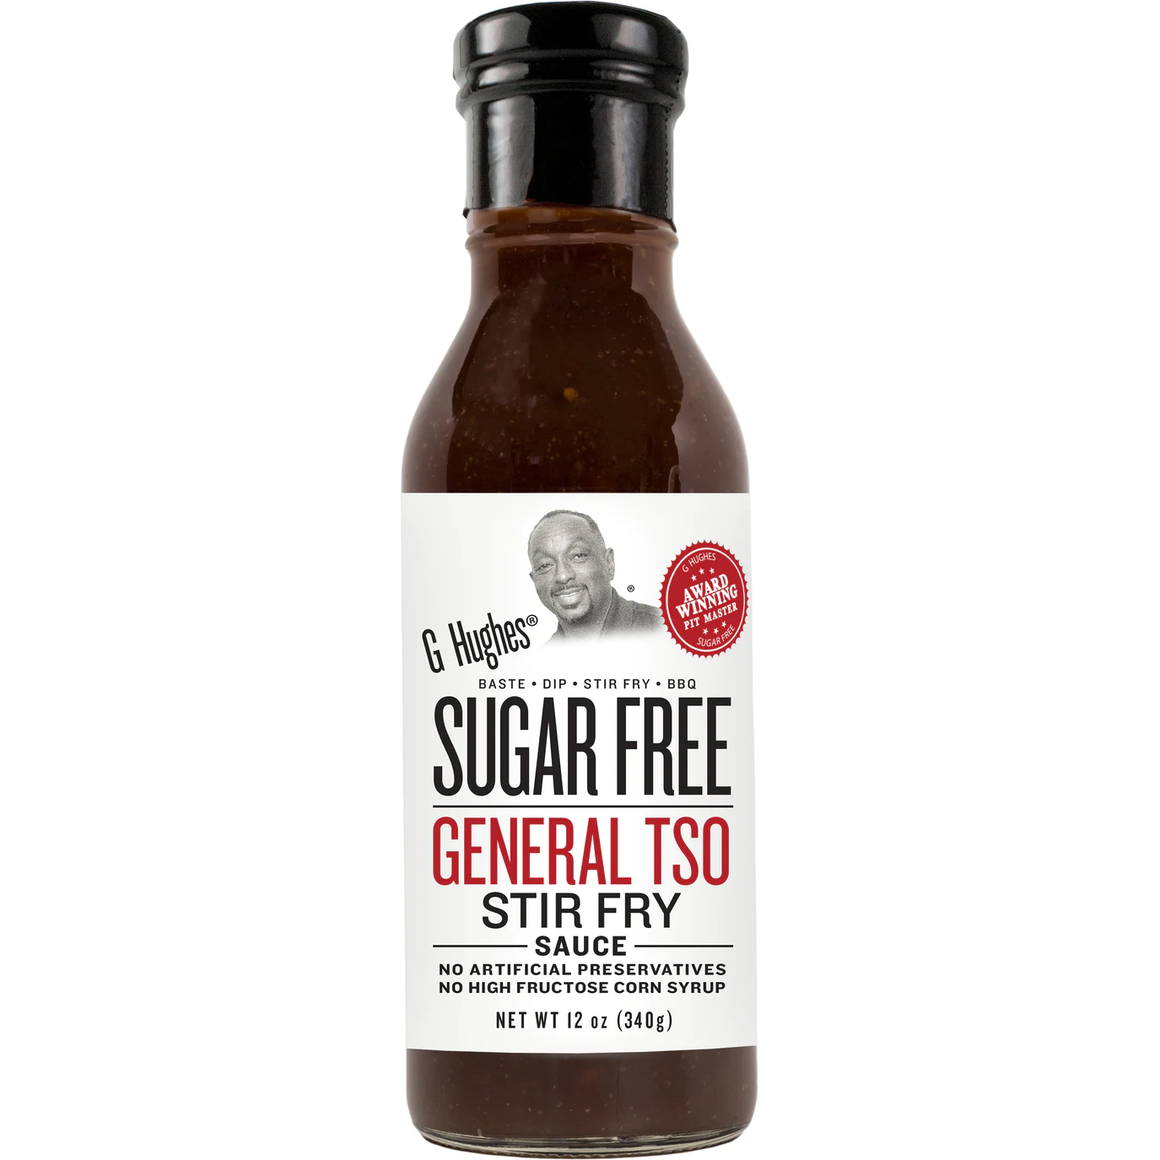 G Hughes Dipping Sauce - Sugar Free General Tso Stir Fry Sauce - 12 oz.